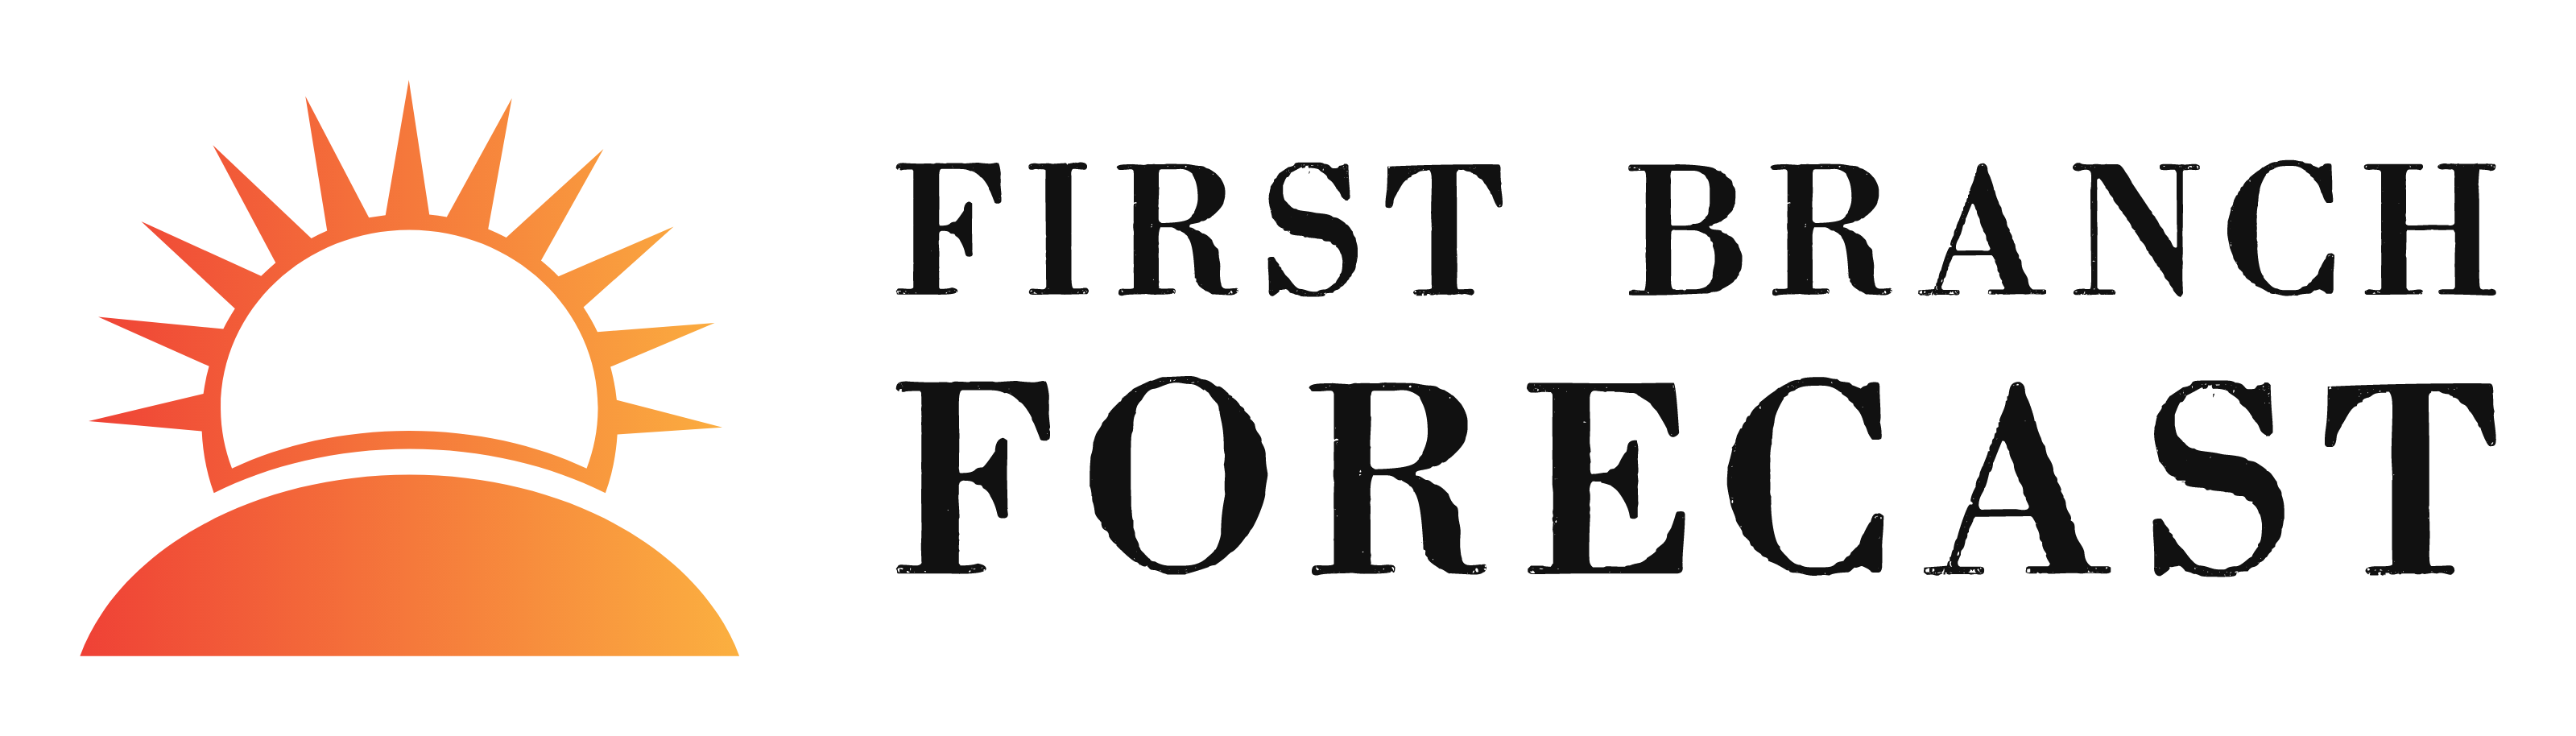 First Branch Forecast Logo